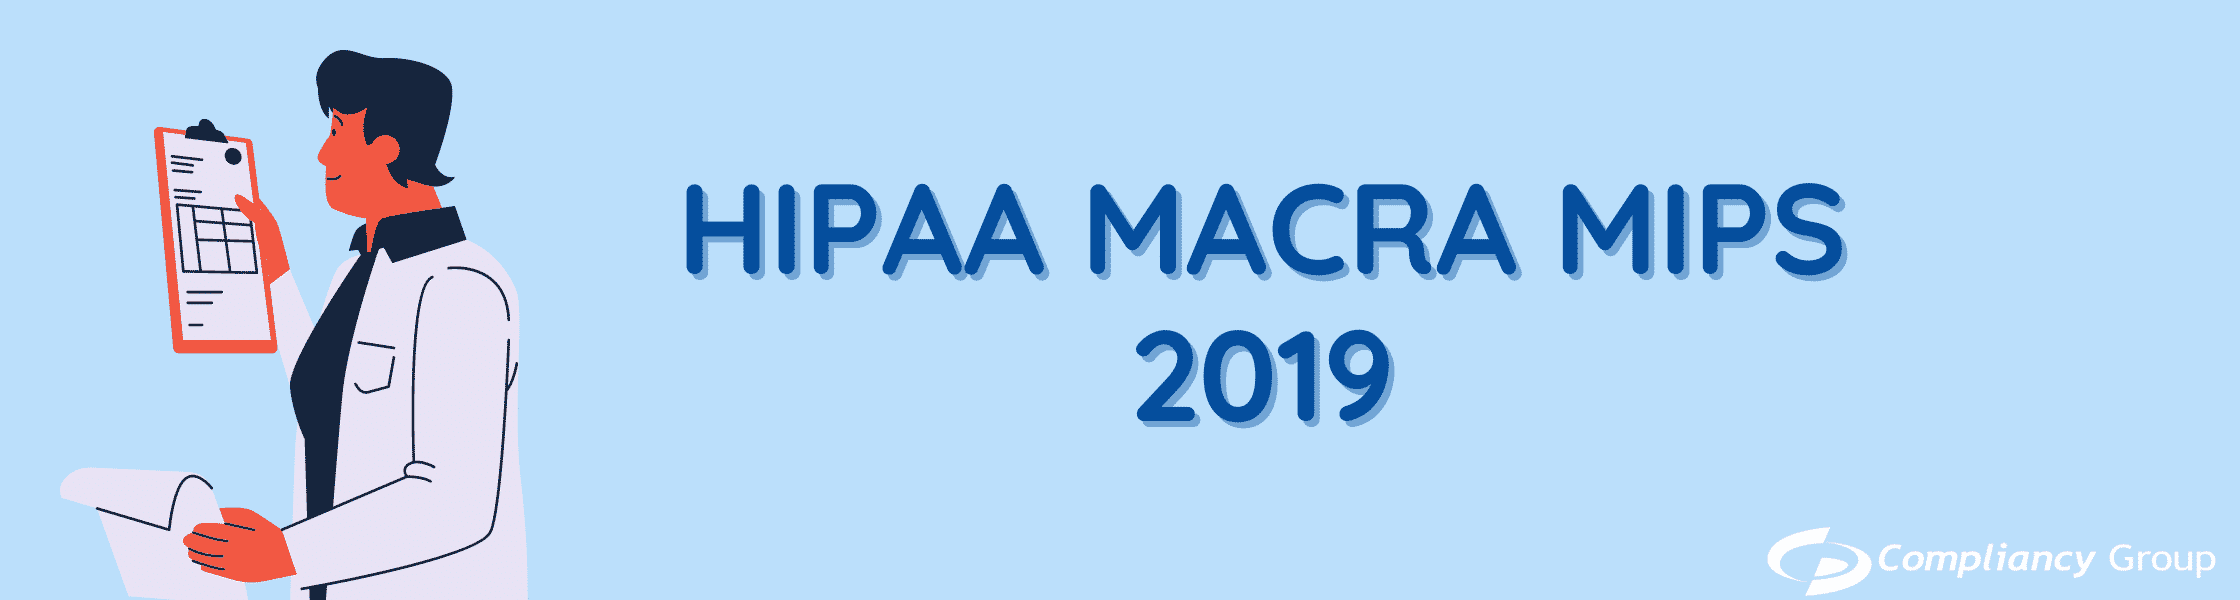 HIPAA MACRA MIPS 2019